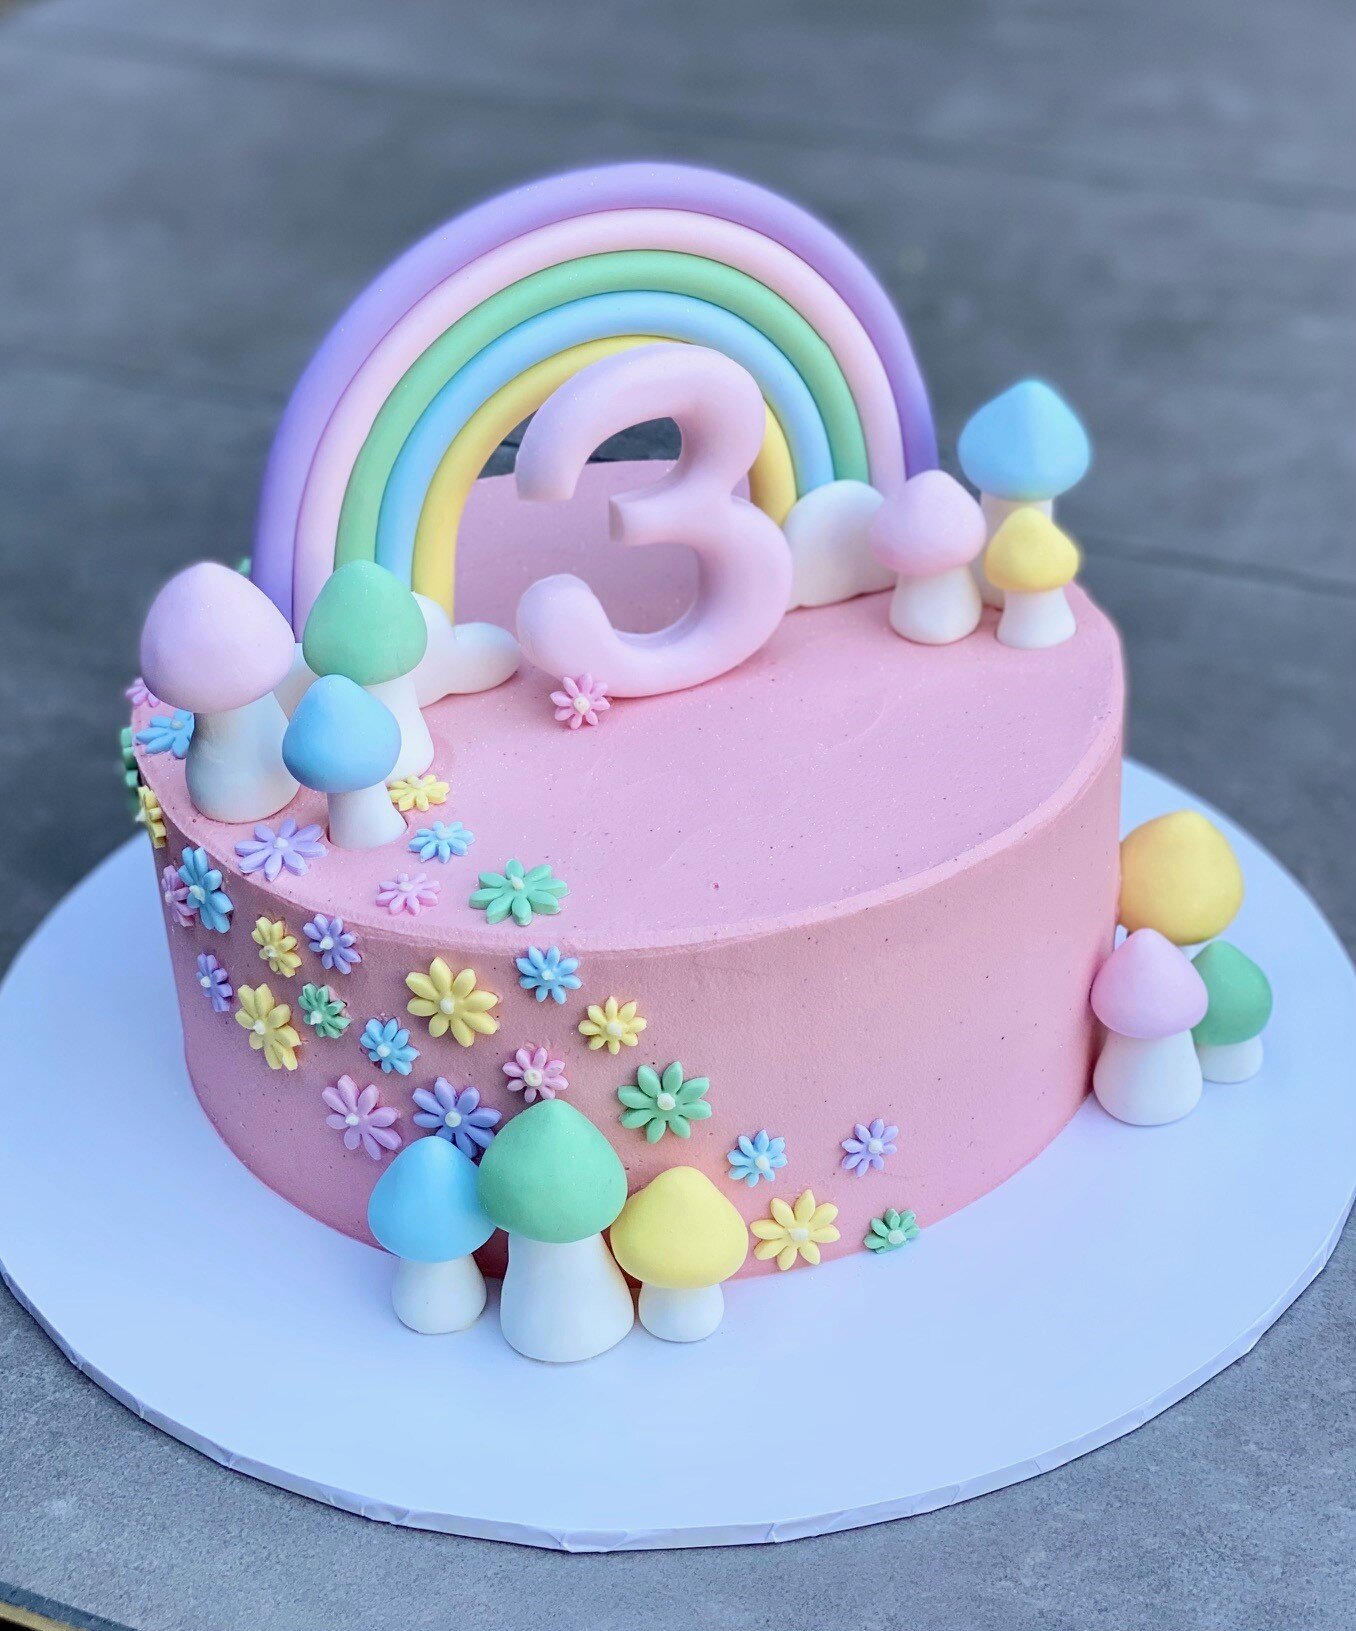 vanillapodspecialtycakes-brisbanecakes-bestcakesintown-noveltycakes-kidscakes-weddingcakes-abstractbuttercream-corporatecakes-cupcakes (15).jpg